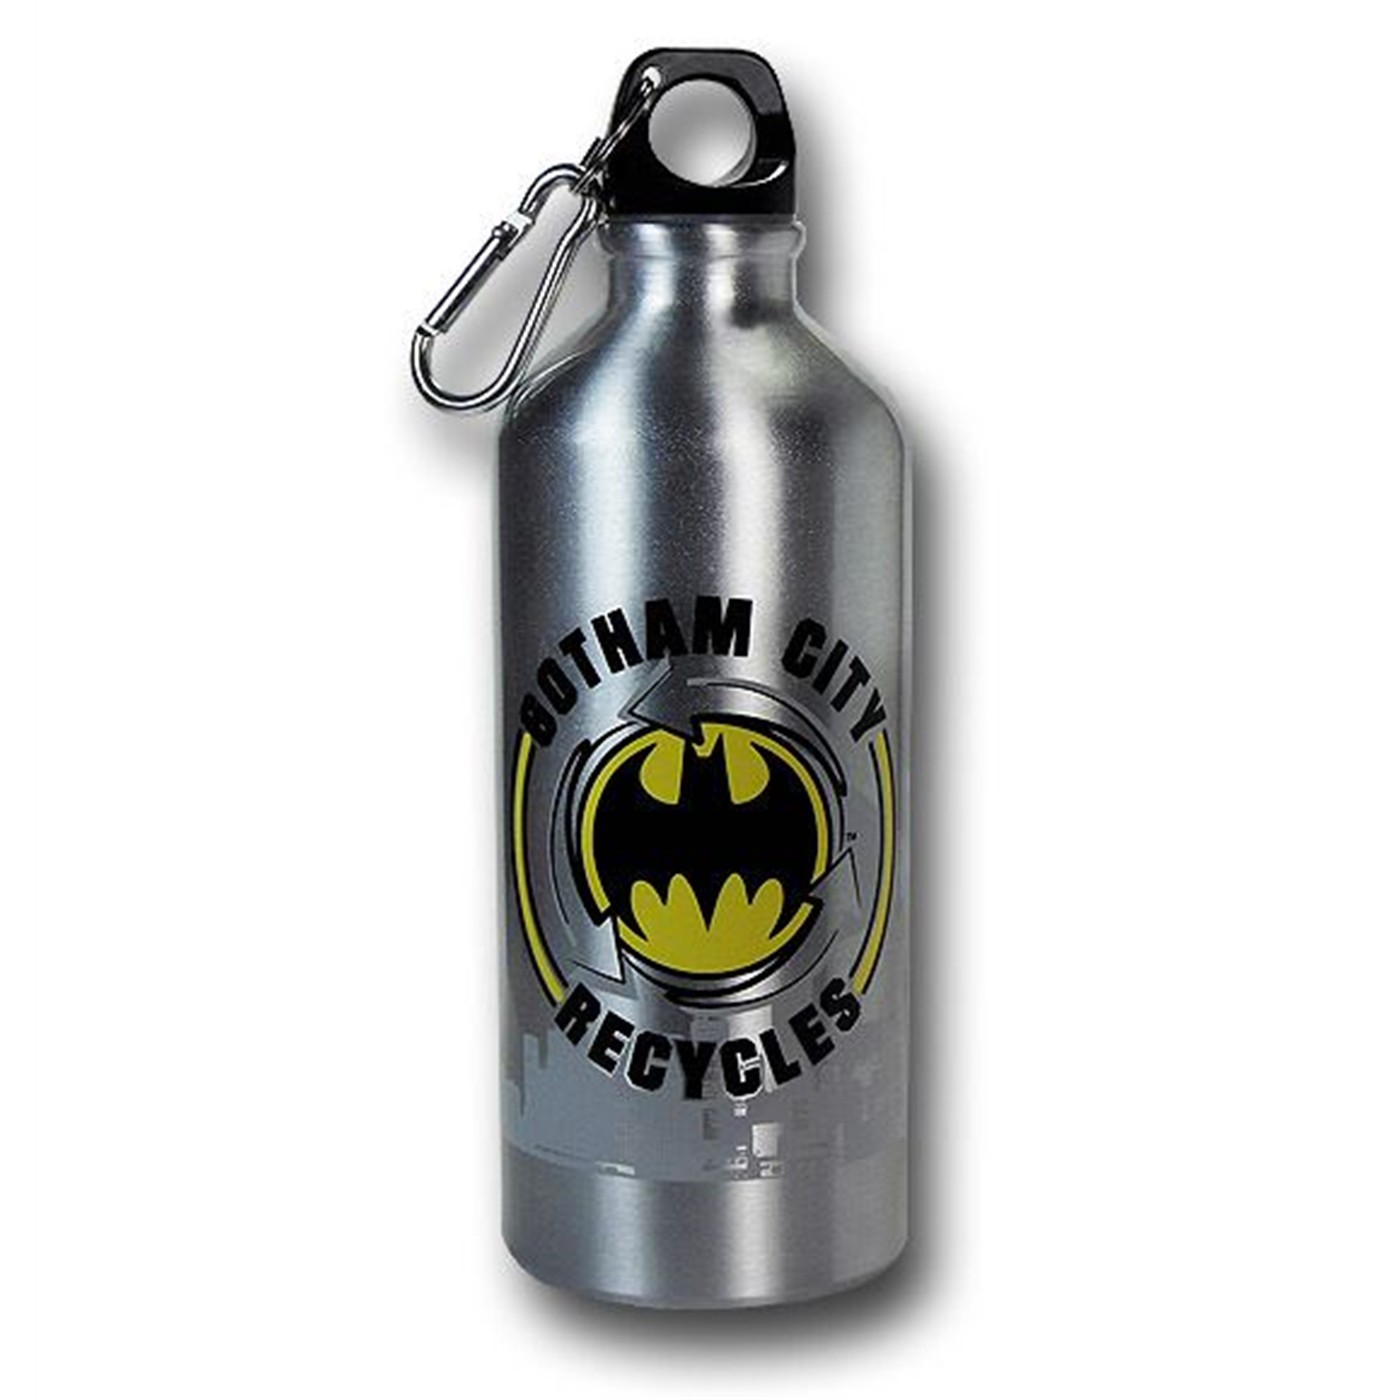 Batman Gotham Recycles 20oz Aluminum Water Bottle